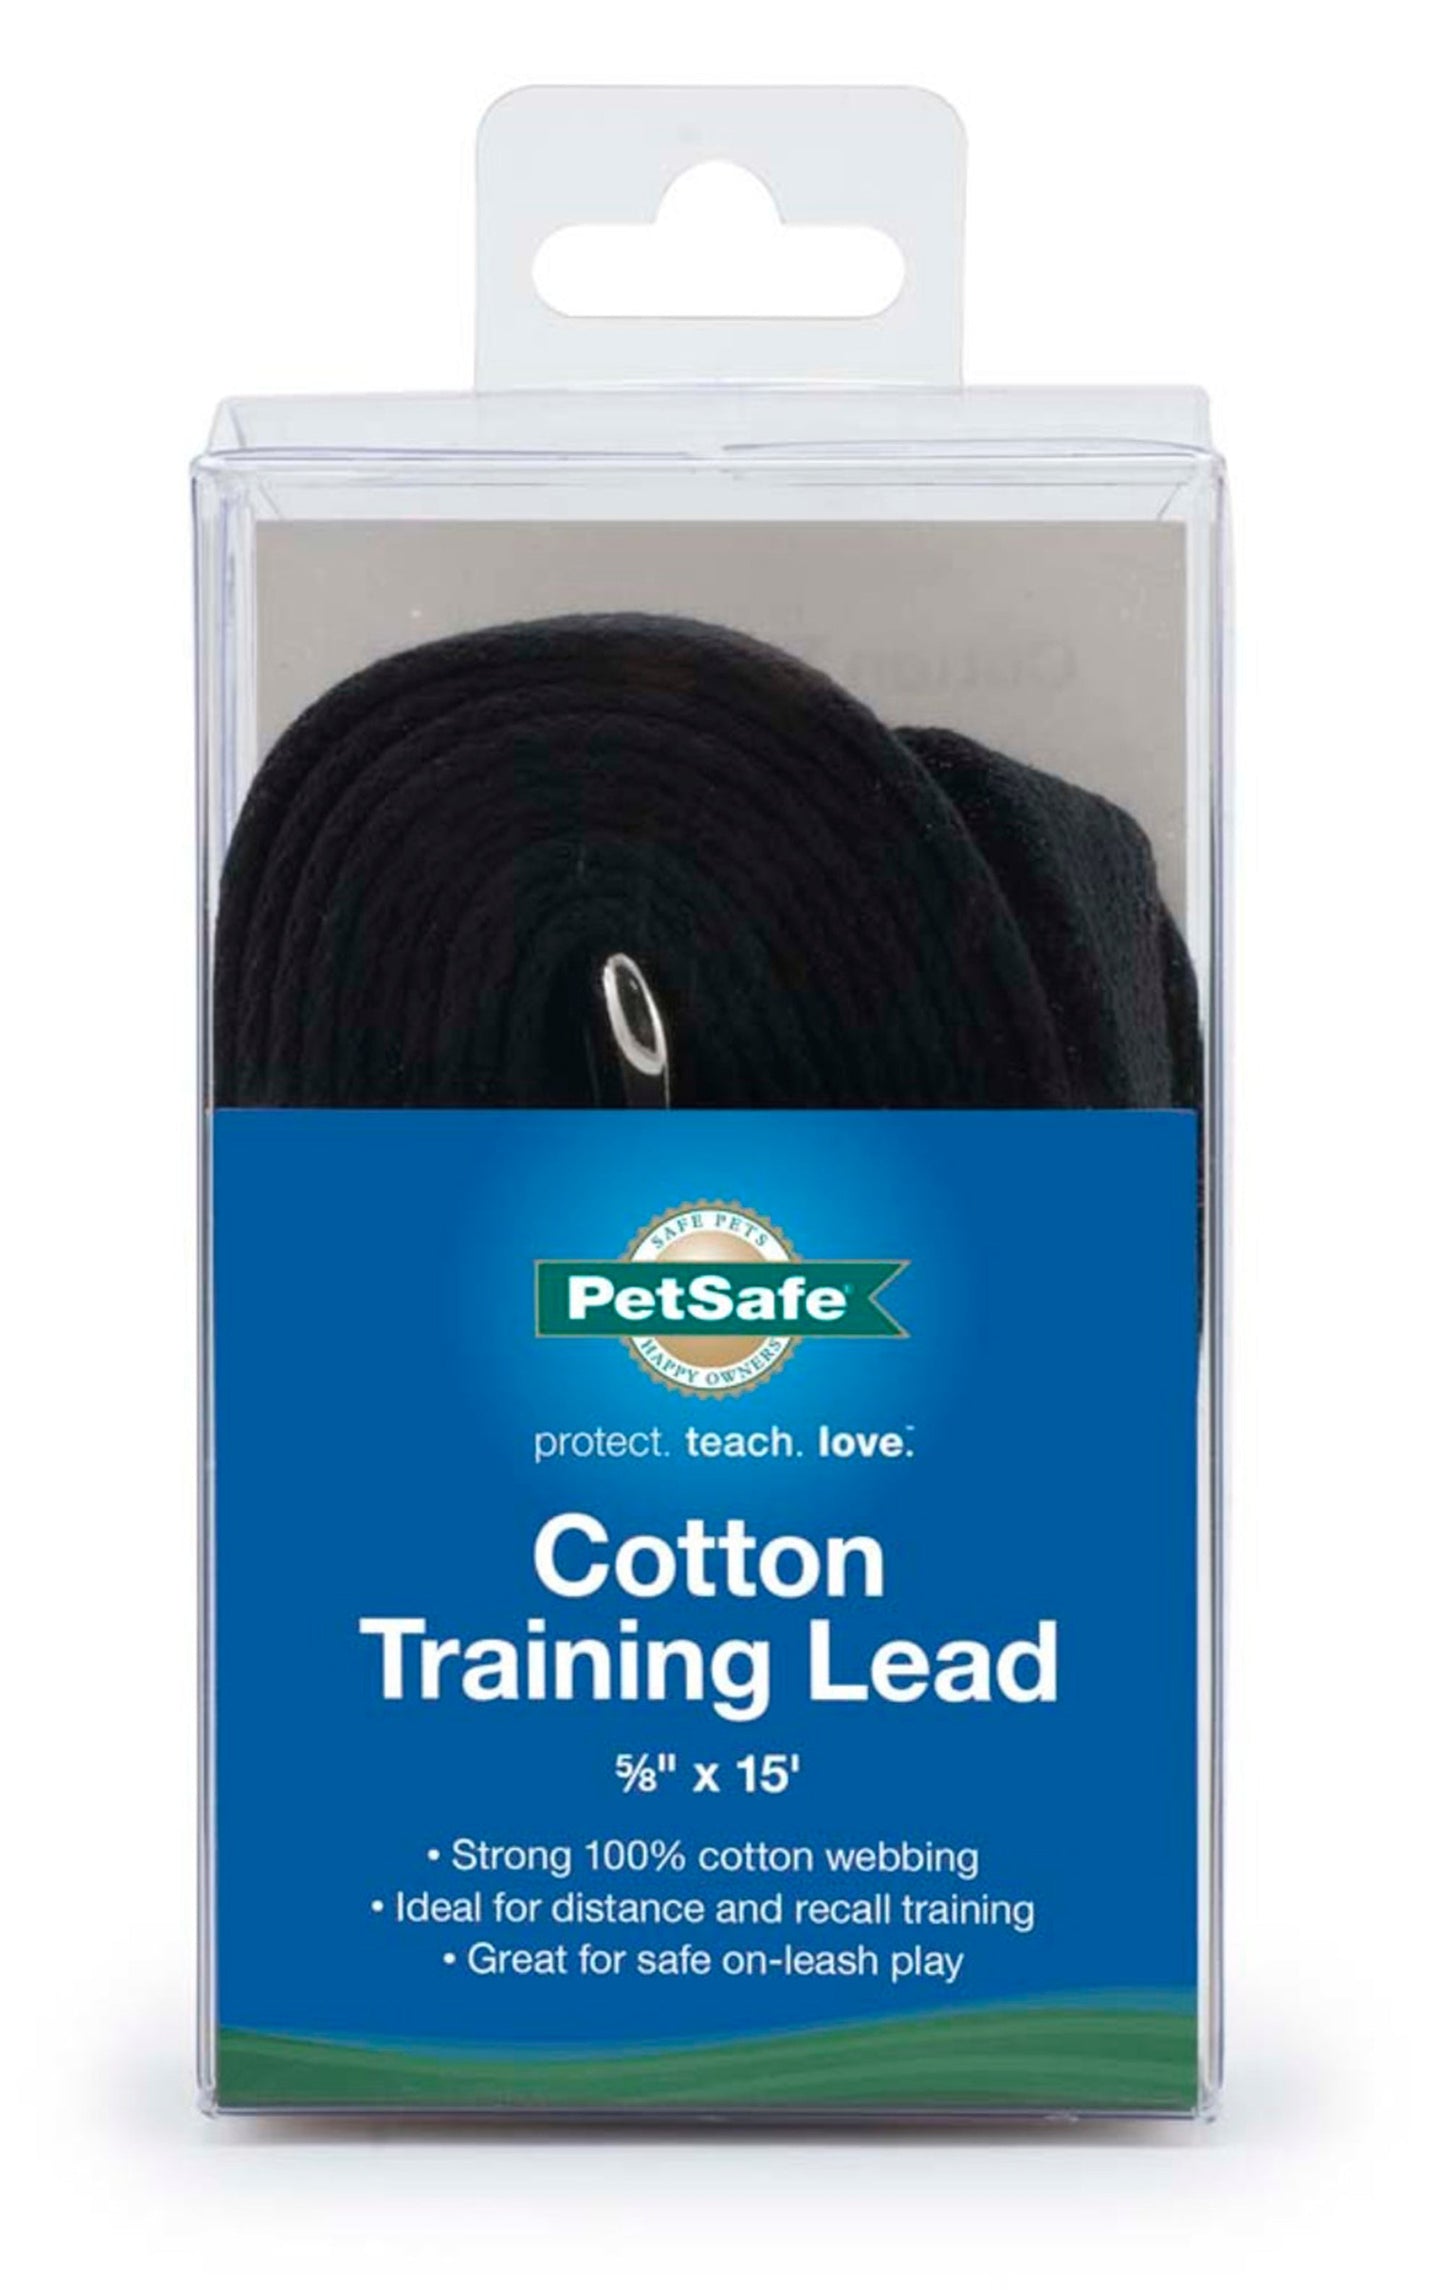 PetSafe Cotton Training Leash Black 1ea/5/8 In X 15 ft